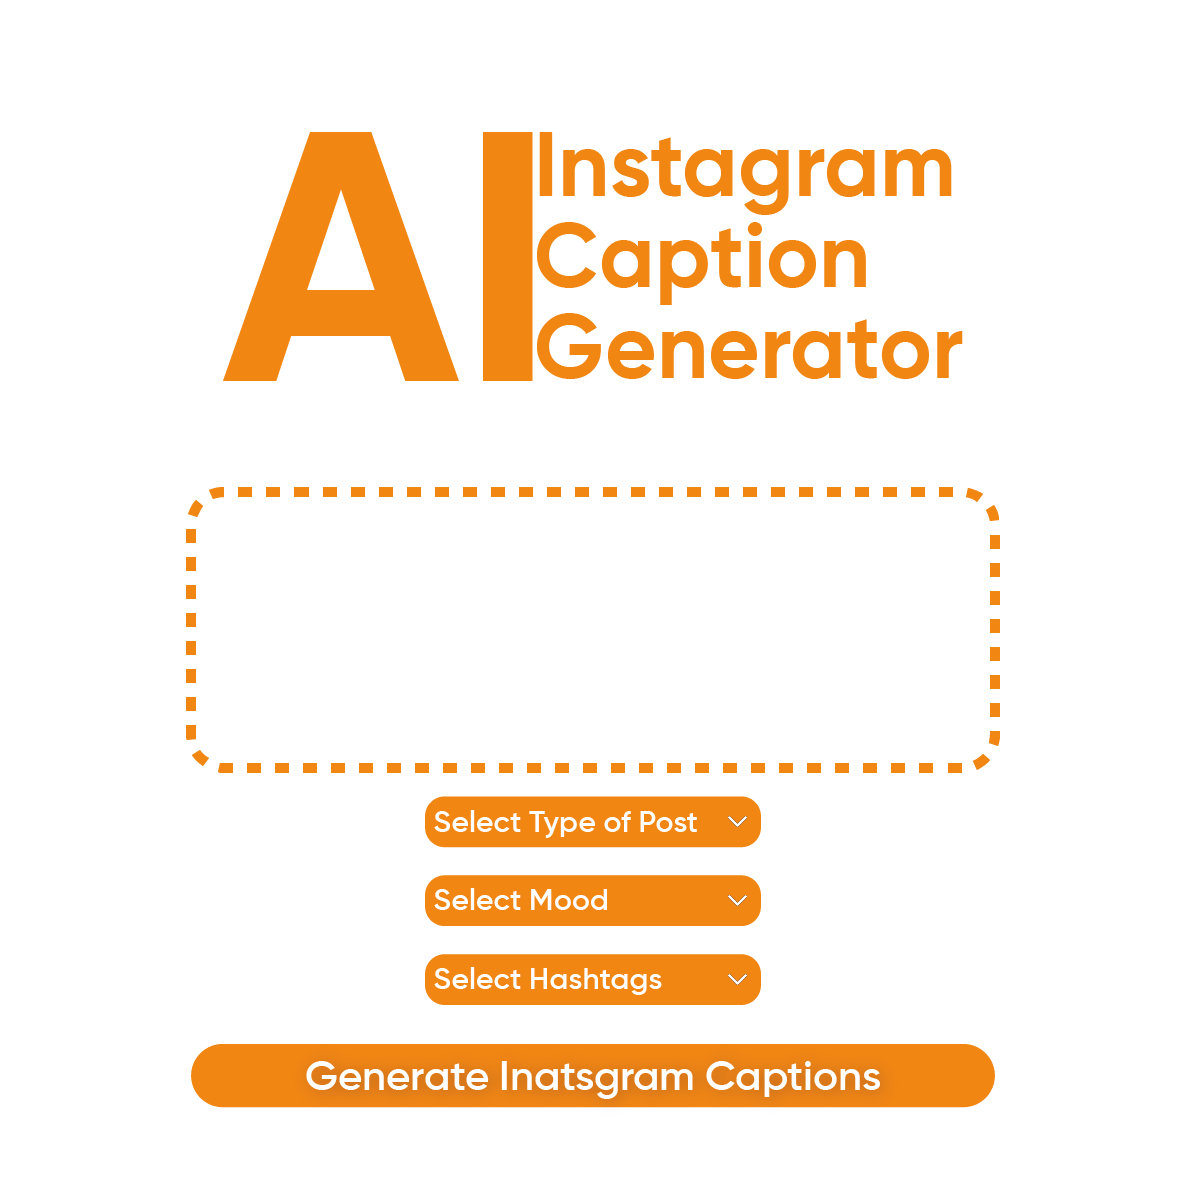 Why use Ettvi's AI Instagram Caption tool